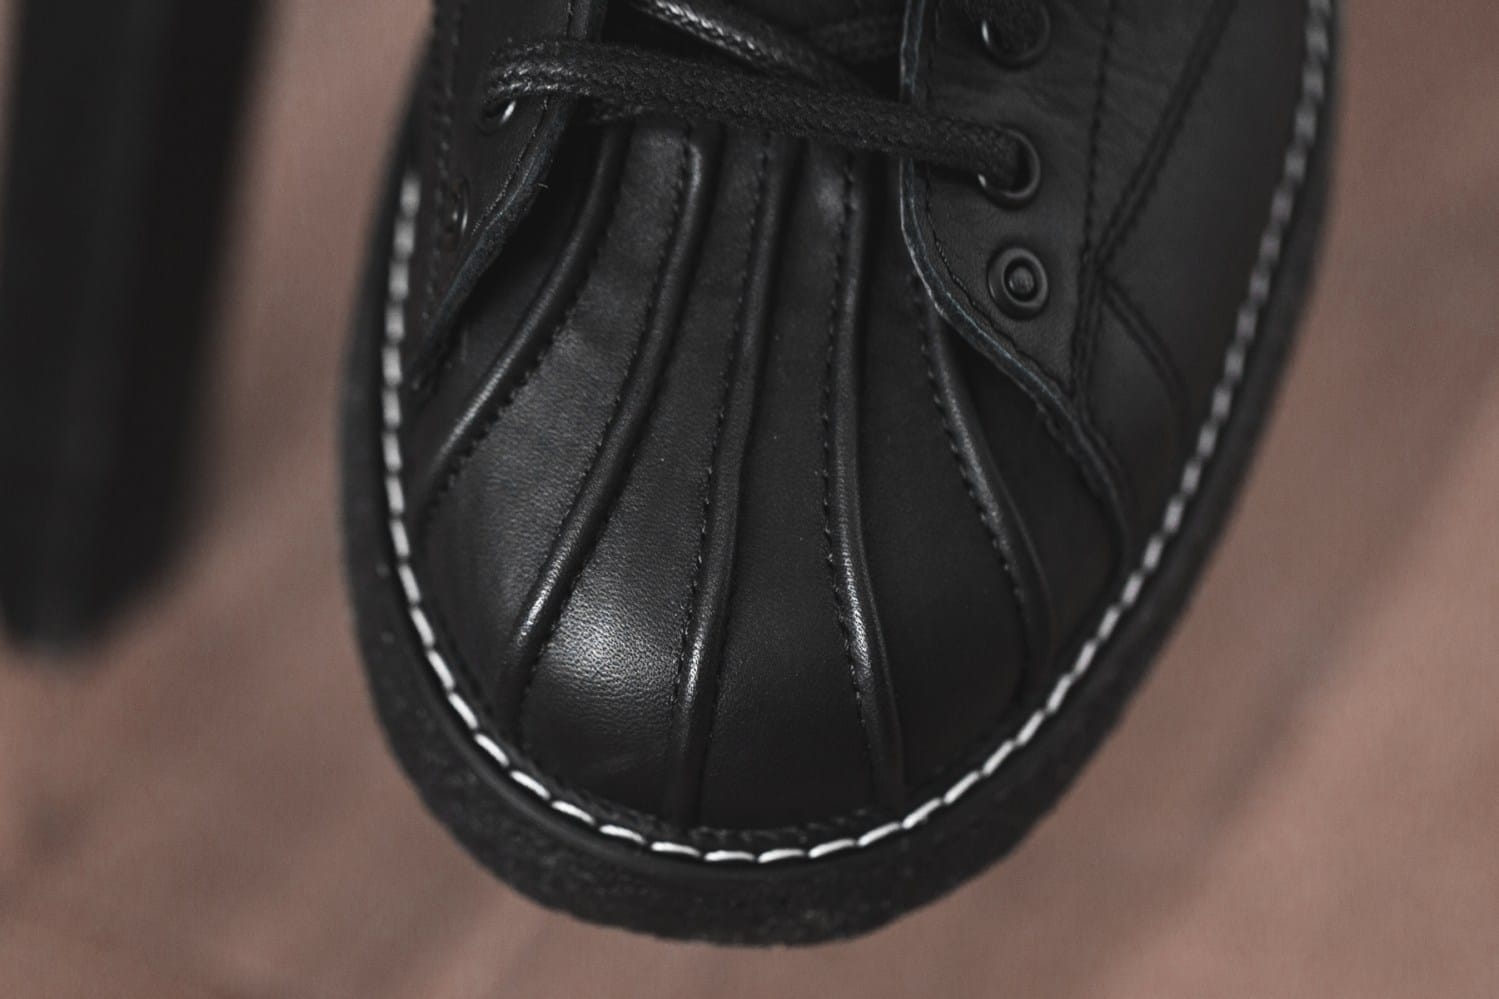 adidas shell toe boots